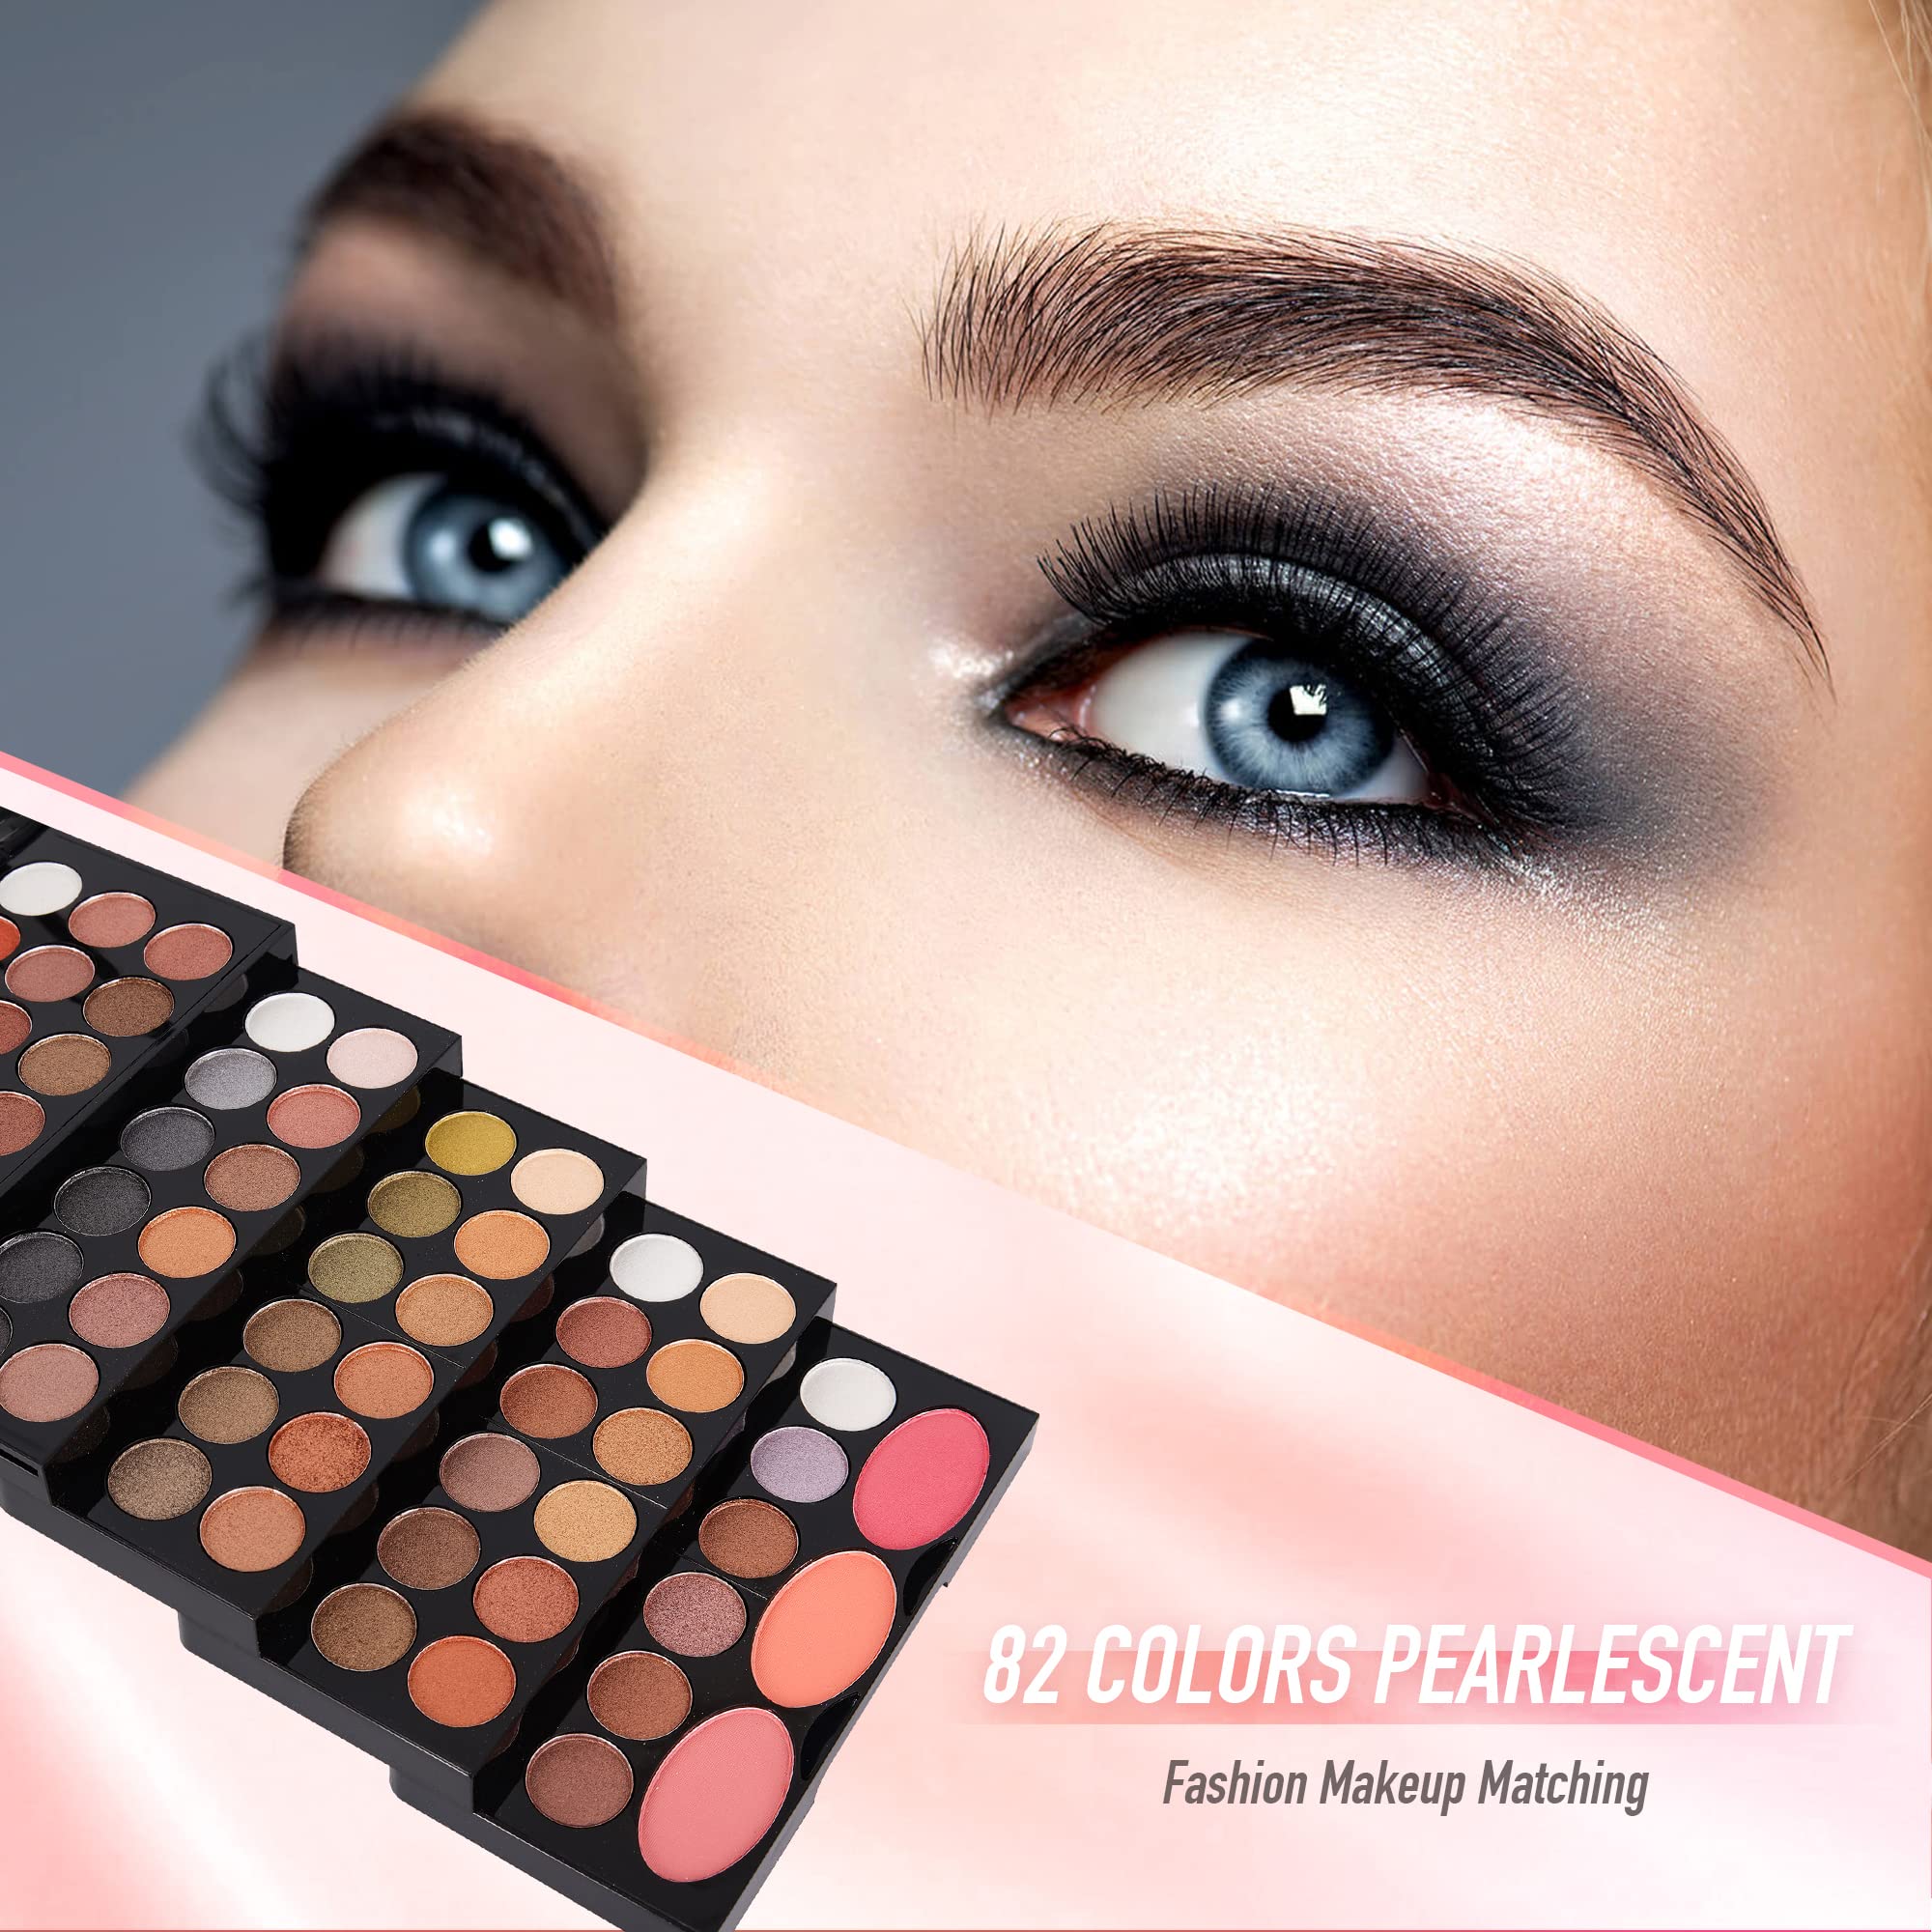 UNIFULL 148 Colors Makeup Palette Set Kit Combination , All In One Makeup Gift Set for women girls, Professional makeup Full Kit